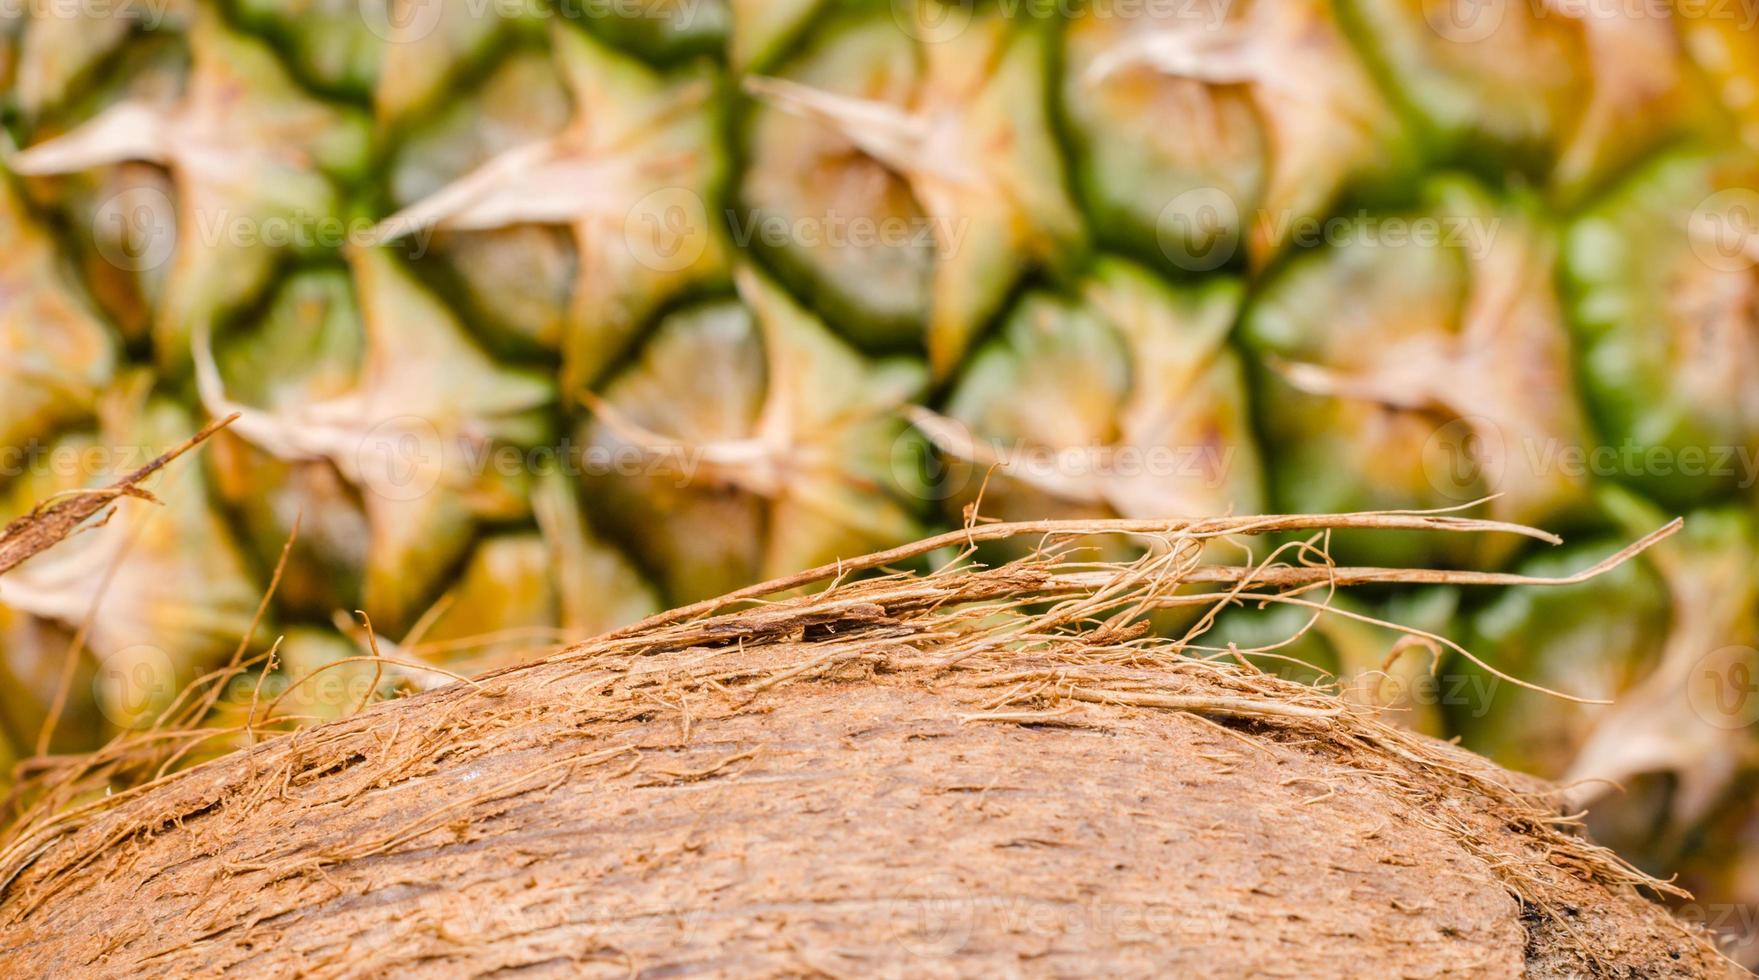 kokosnoot plakje op ananas achtergrond close-up macro foto